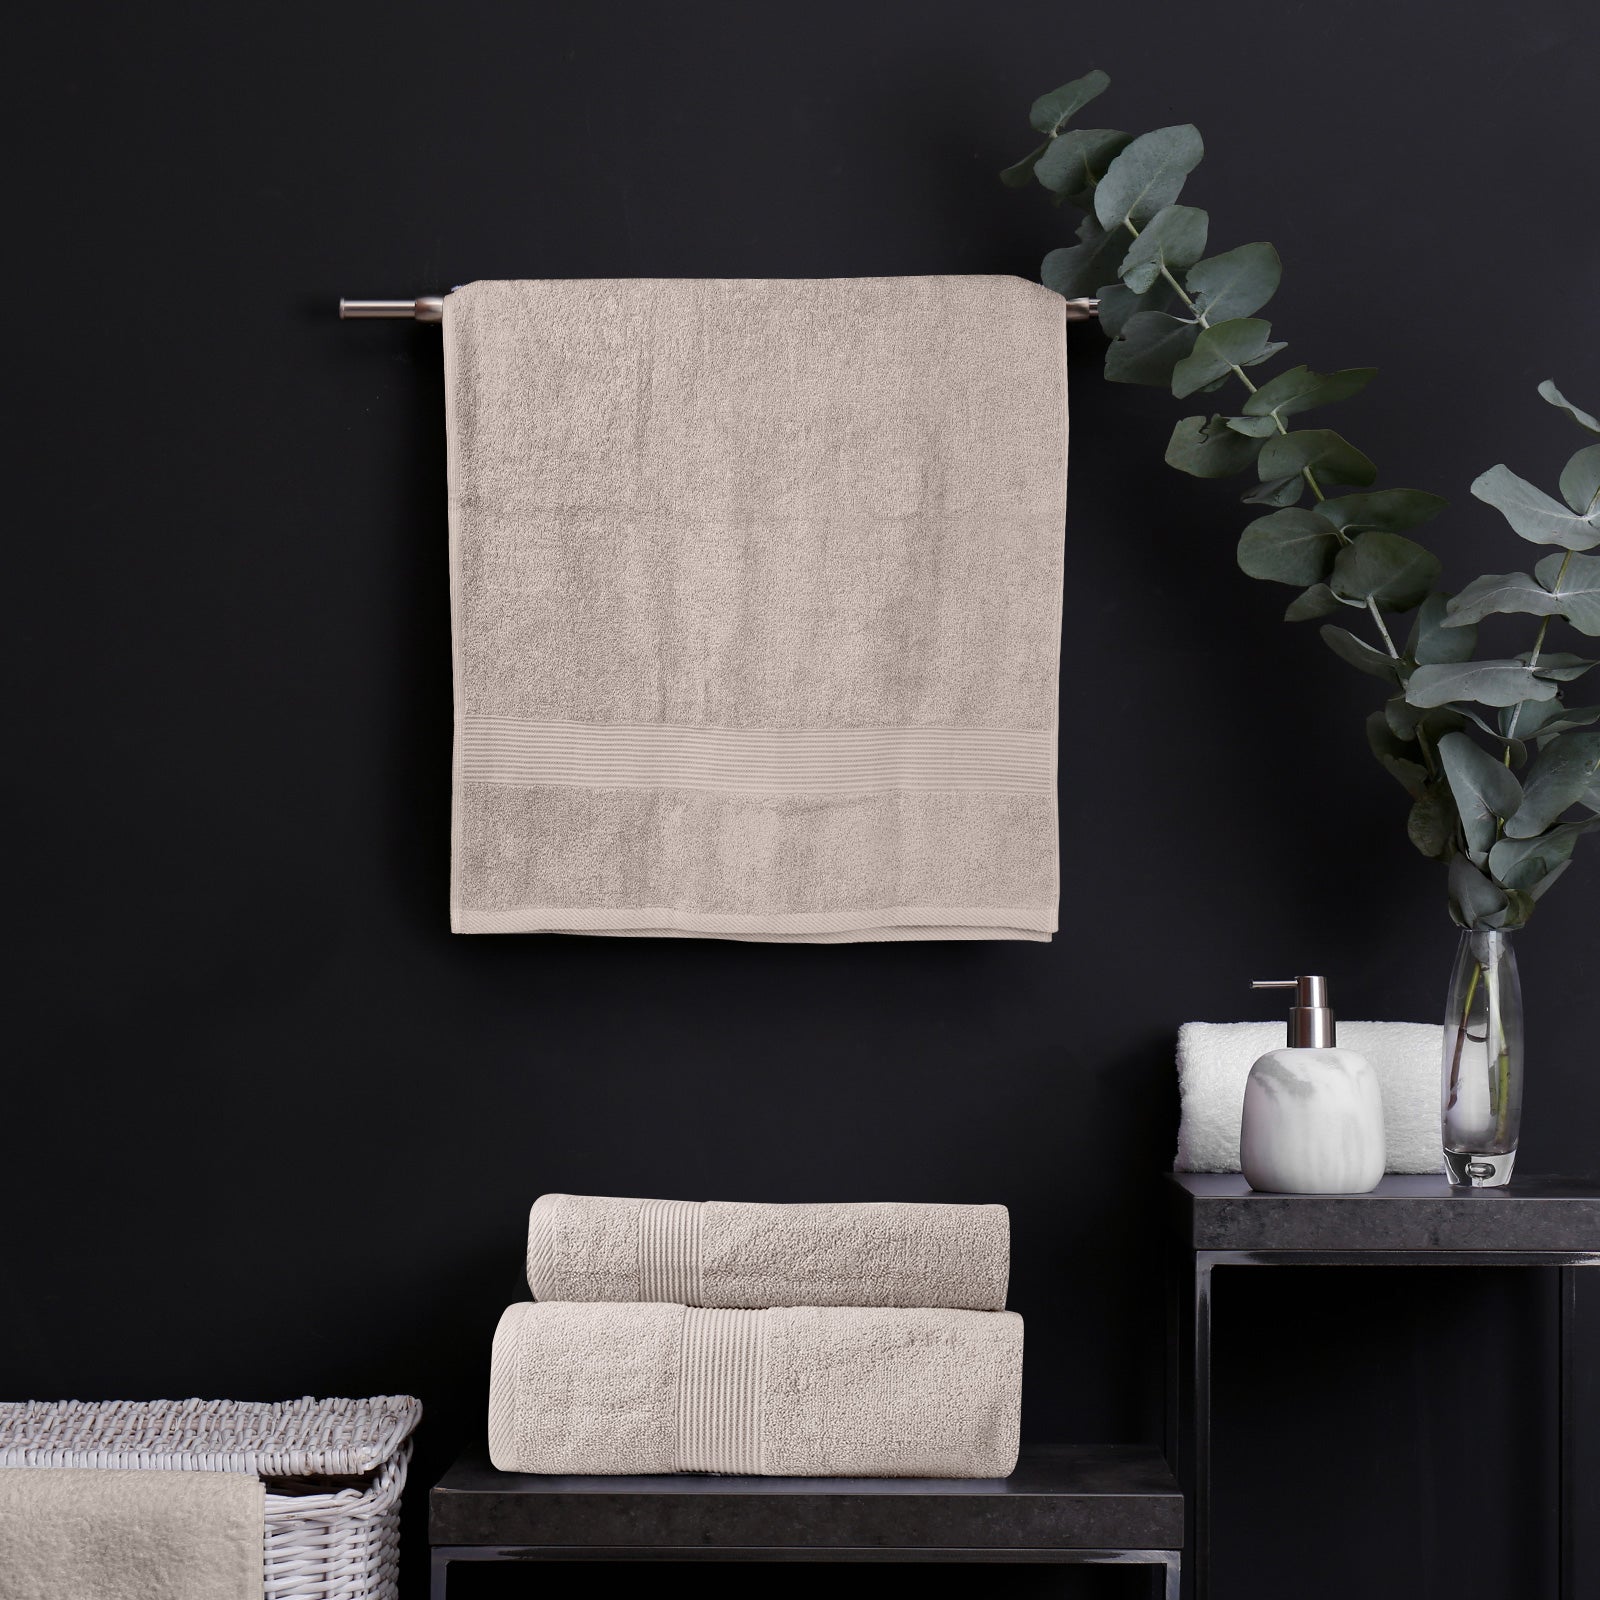 Royal Comfort Cotton Bamboo Towel 5pc Set - Beige